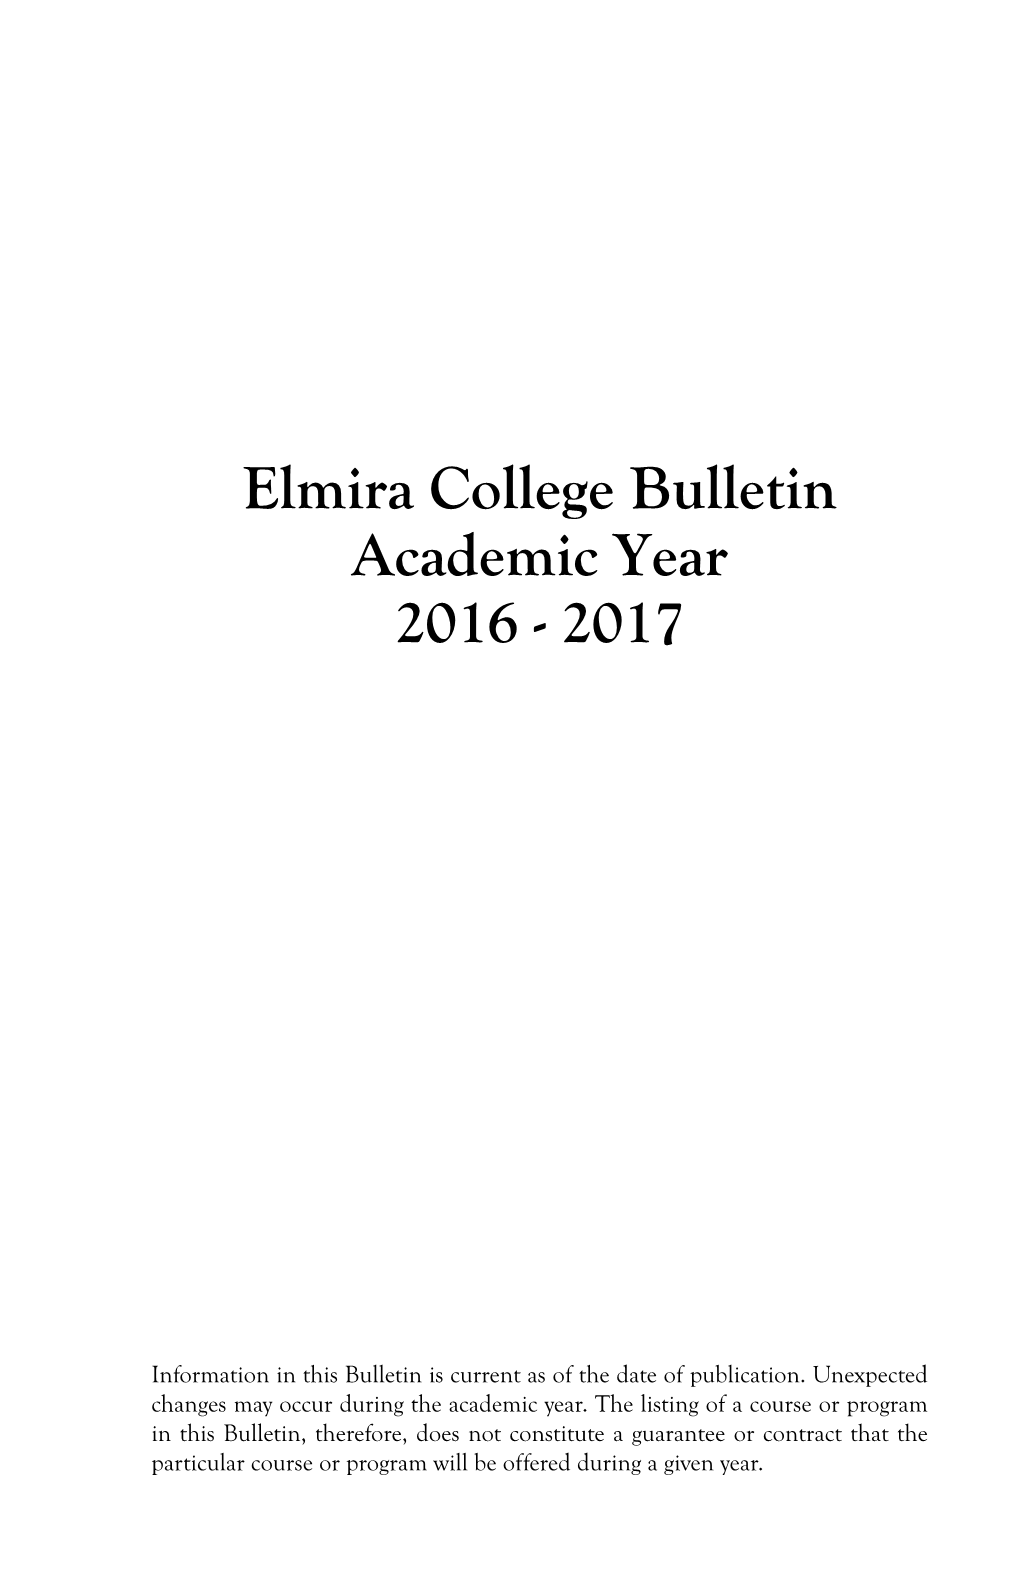 Elmira College Bulletin Academic Year 2016 - 2017